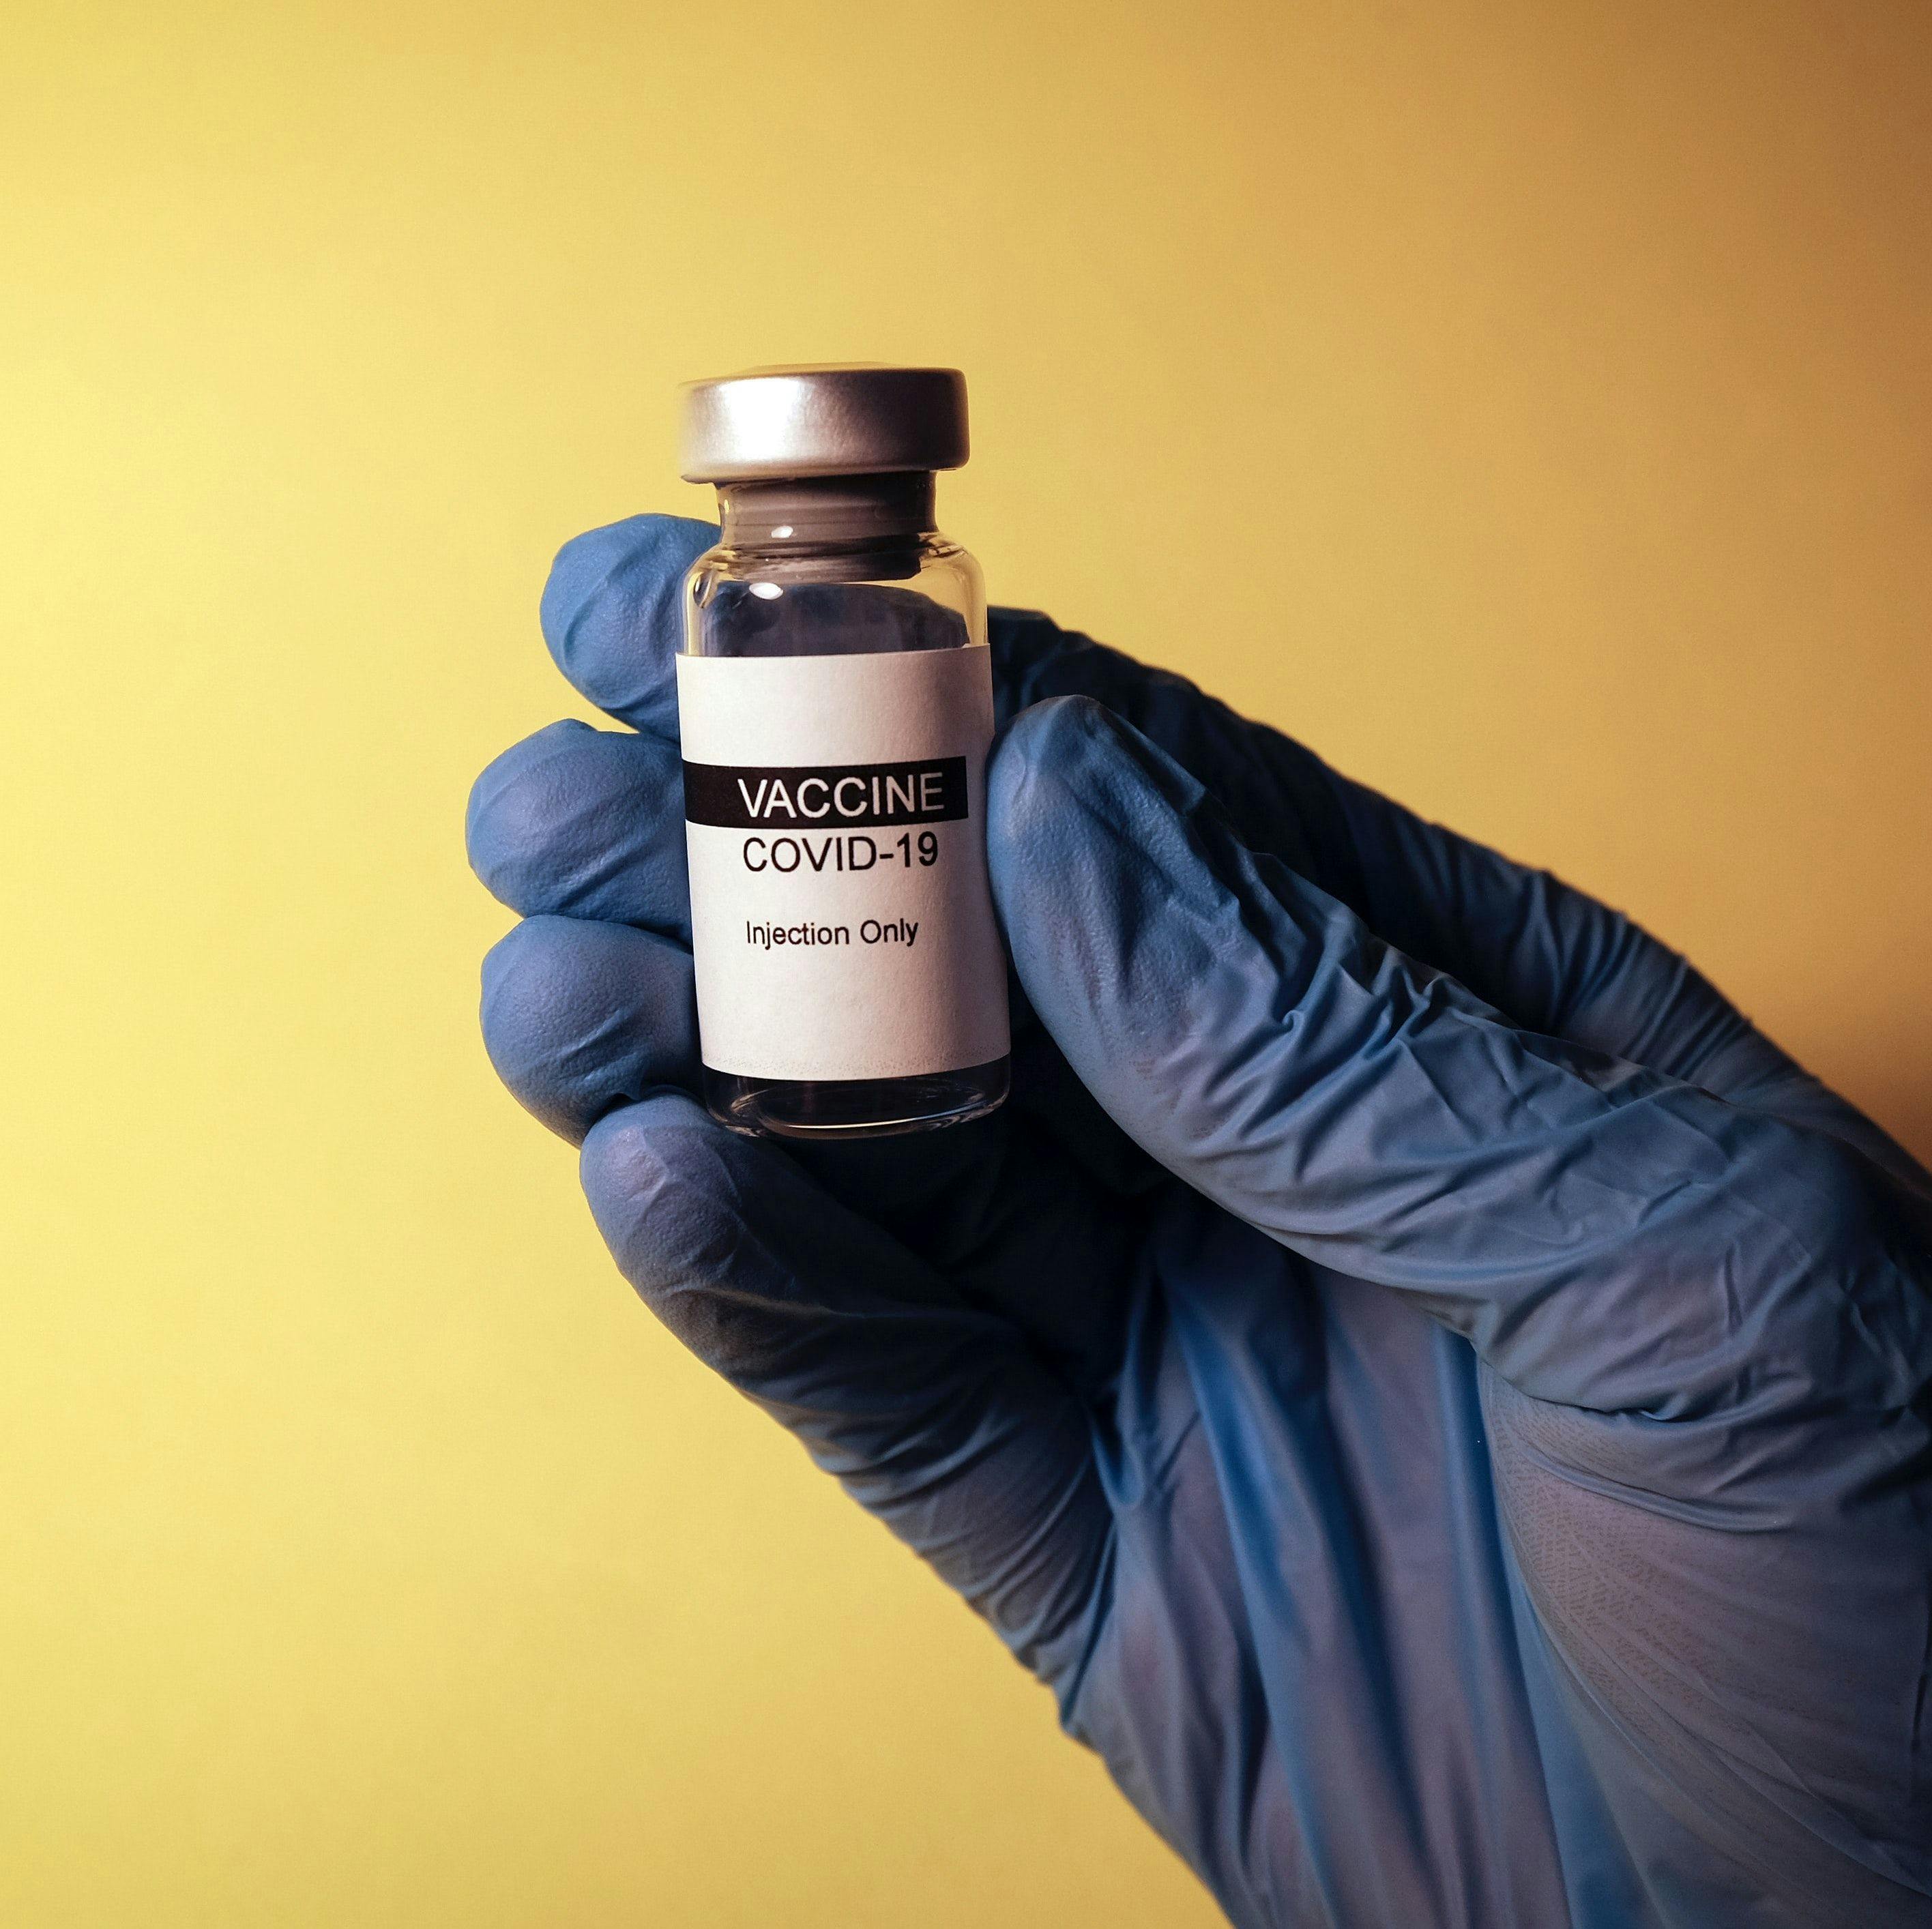 European Countries Suspend Use of AstraZeneca Vaccine